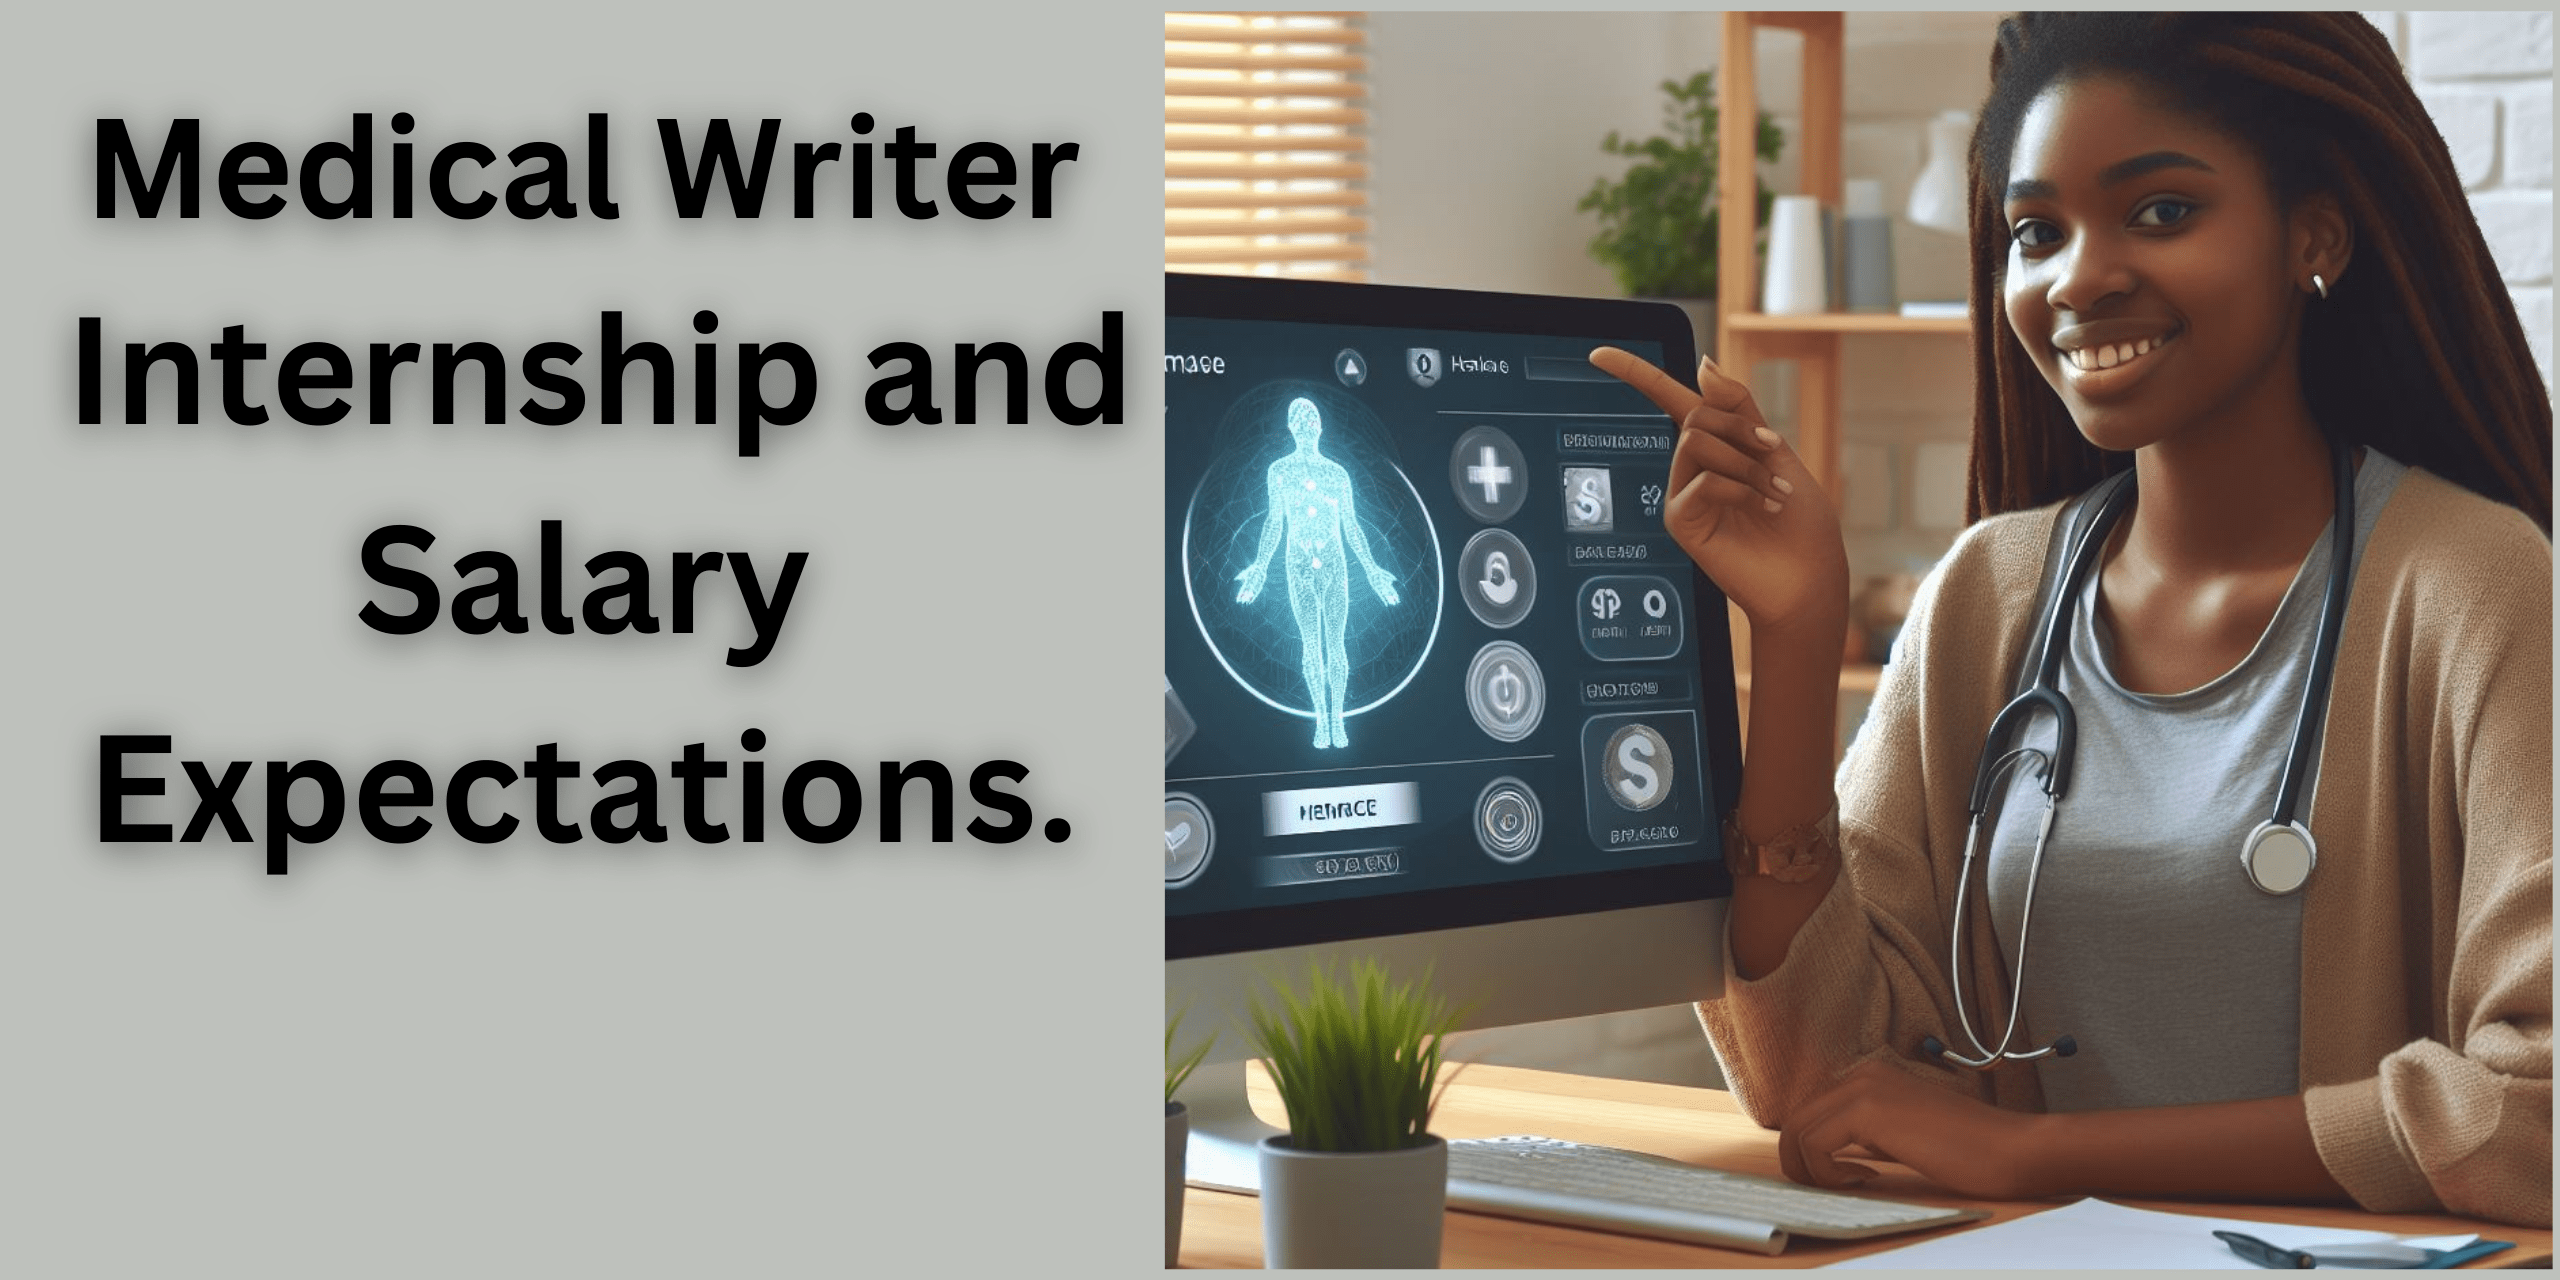 alt="Medical Writer Internship and salary expectations"